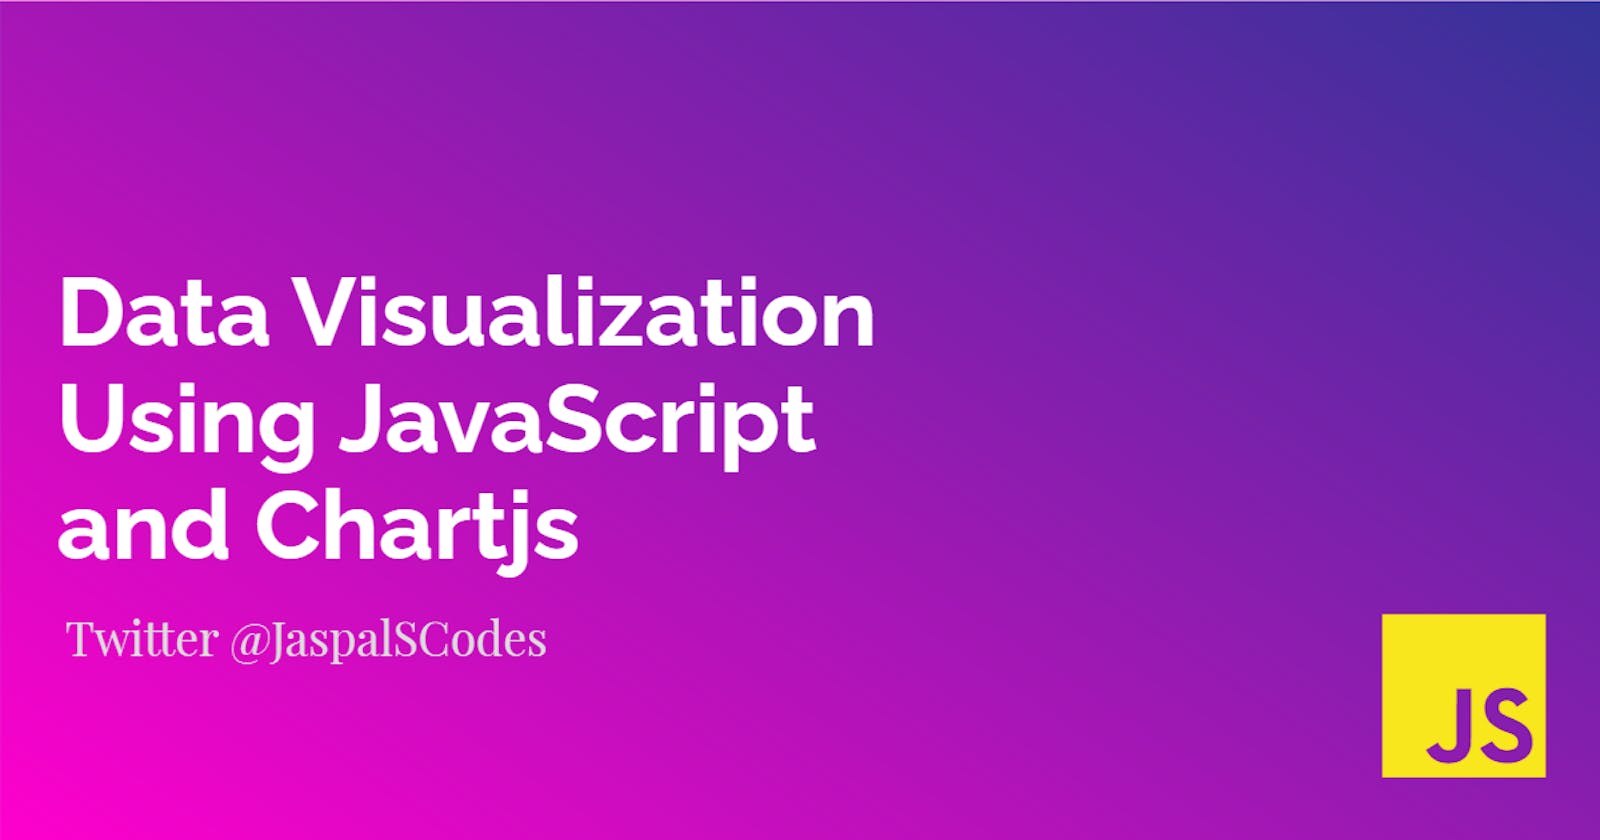 Data Visualization Using Chartjs and JavaScript